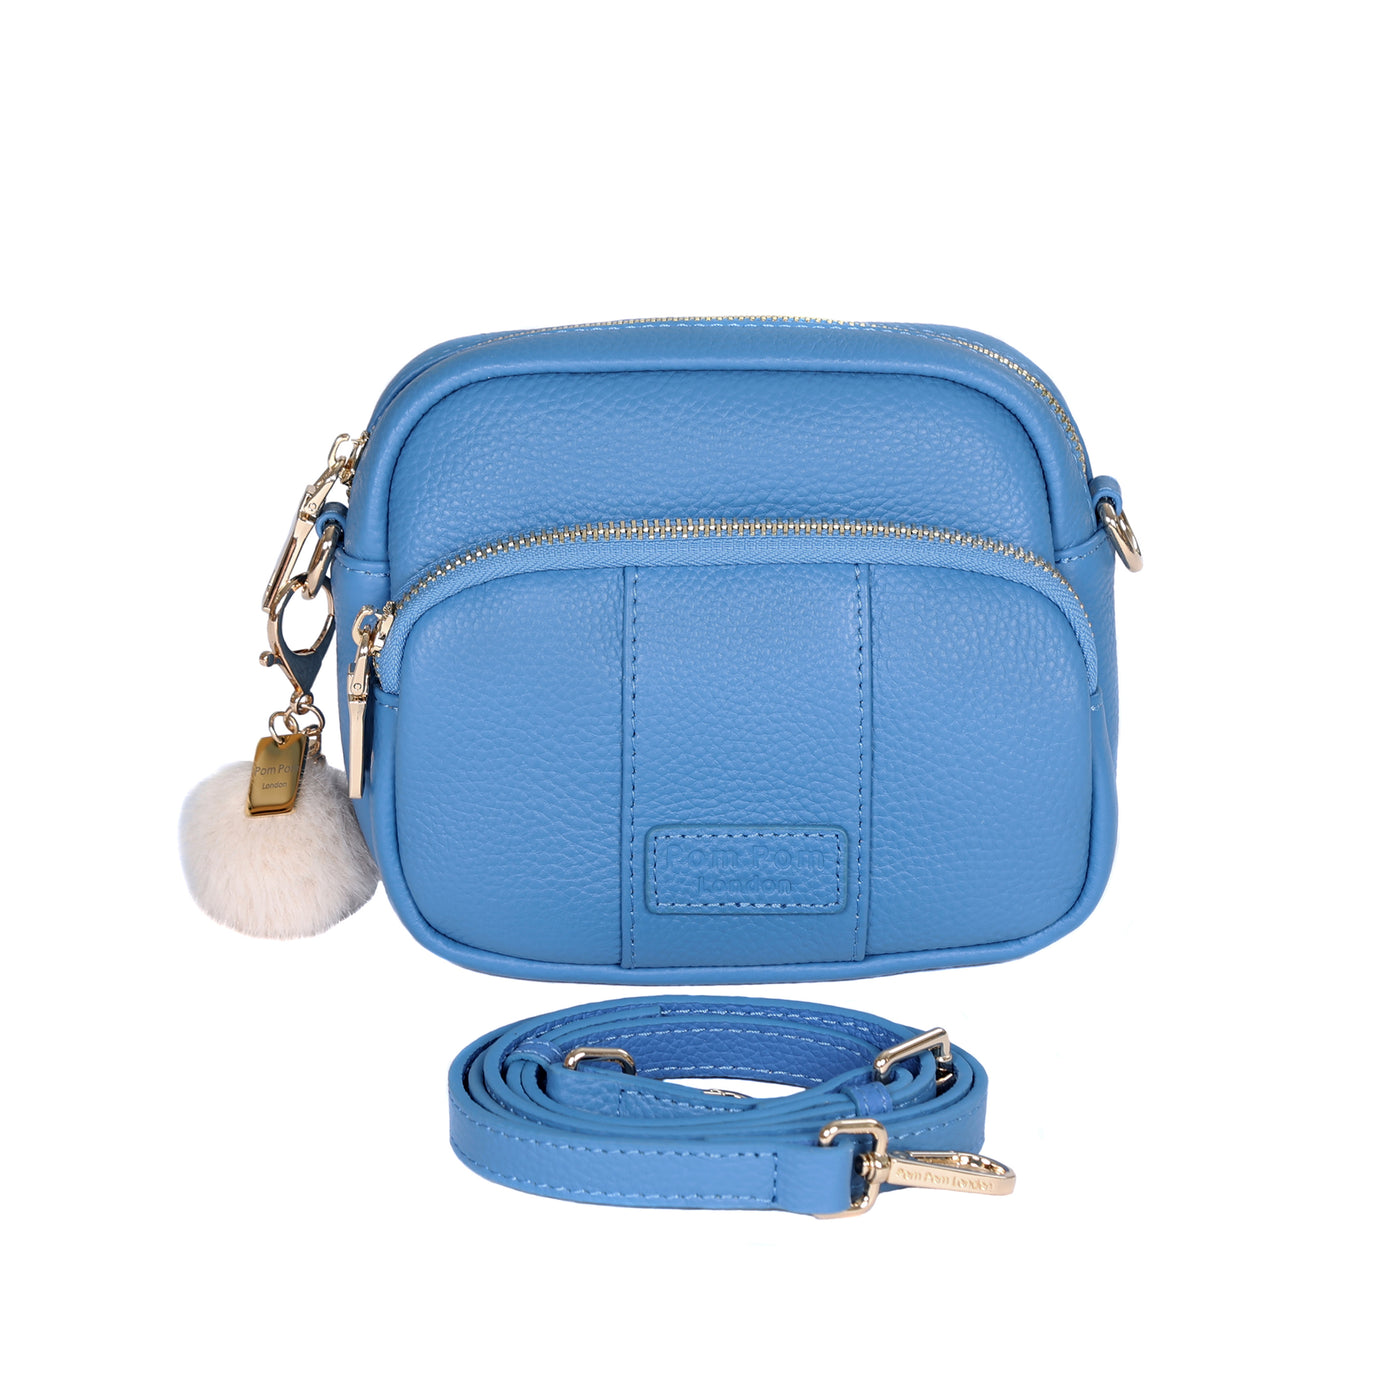 Mayfair MINI Bag Cornflower Blue & Accessories